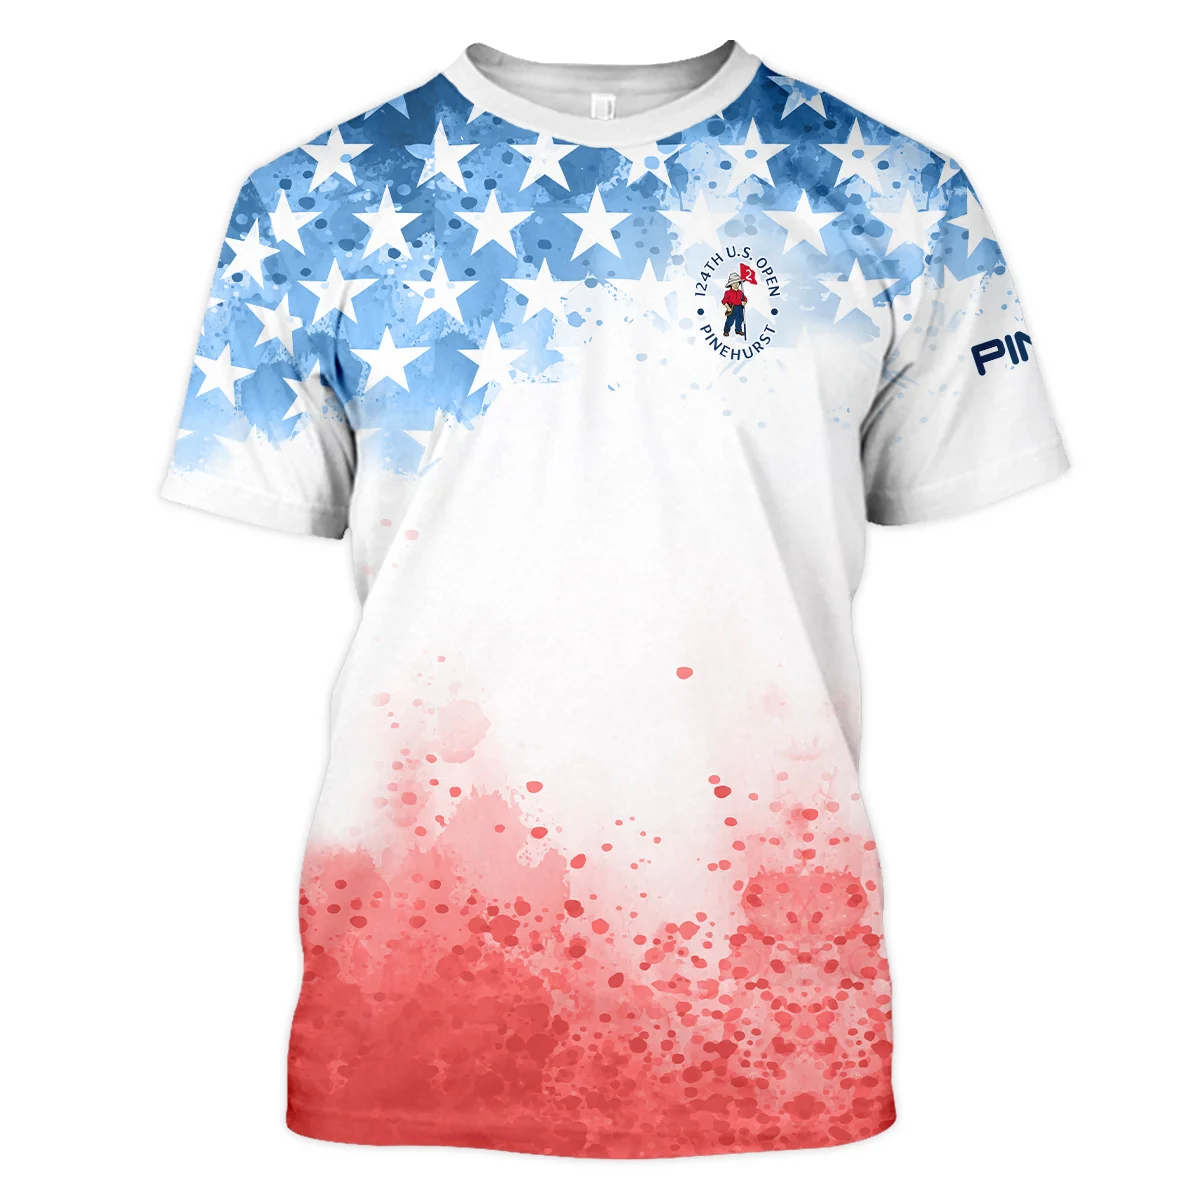 Special Version 124th U.S. Open Pinehurst Ping Unisex T-Shirt Watercolor Blue Red Stars T-Shirt